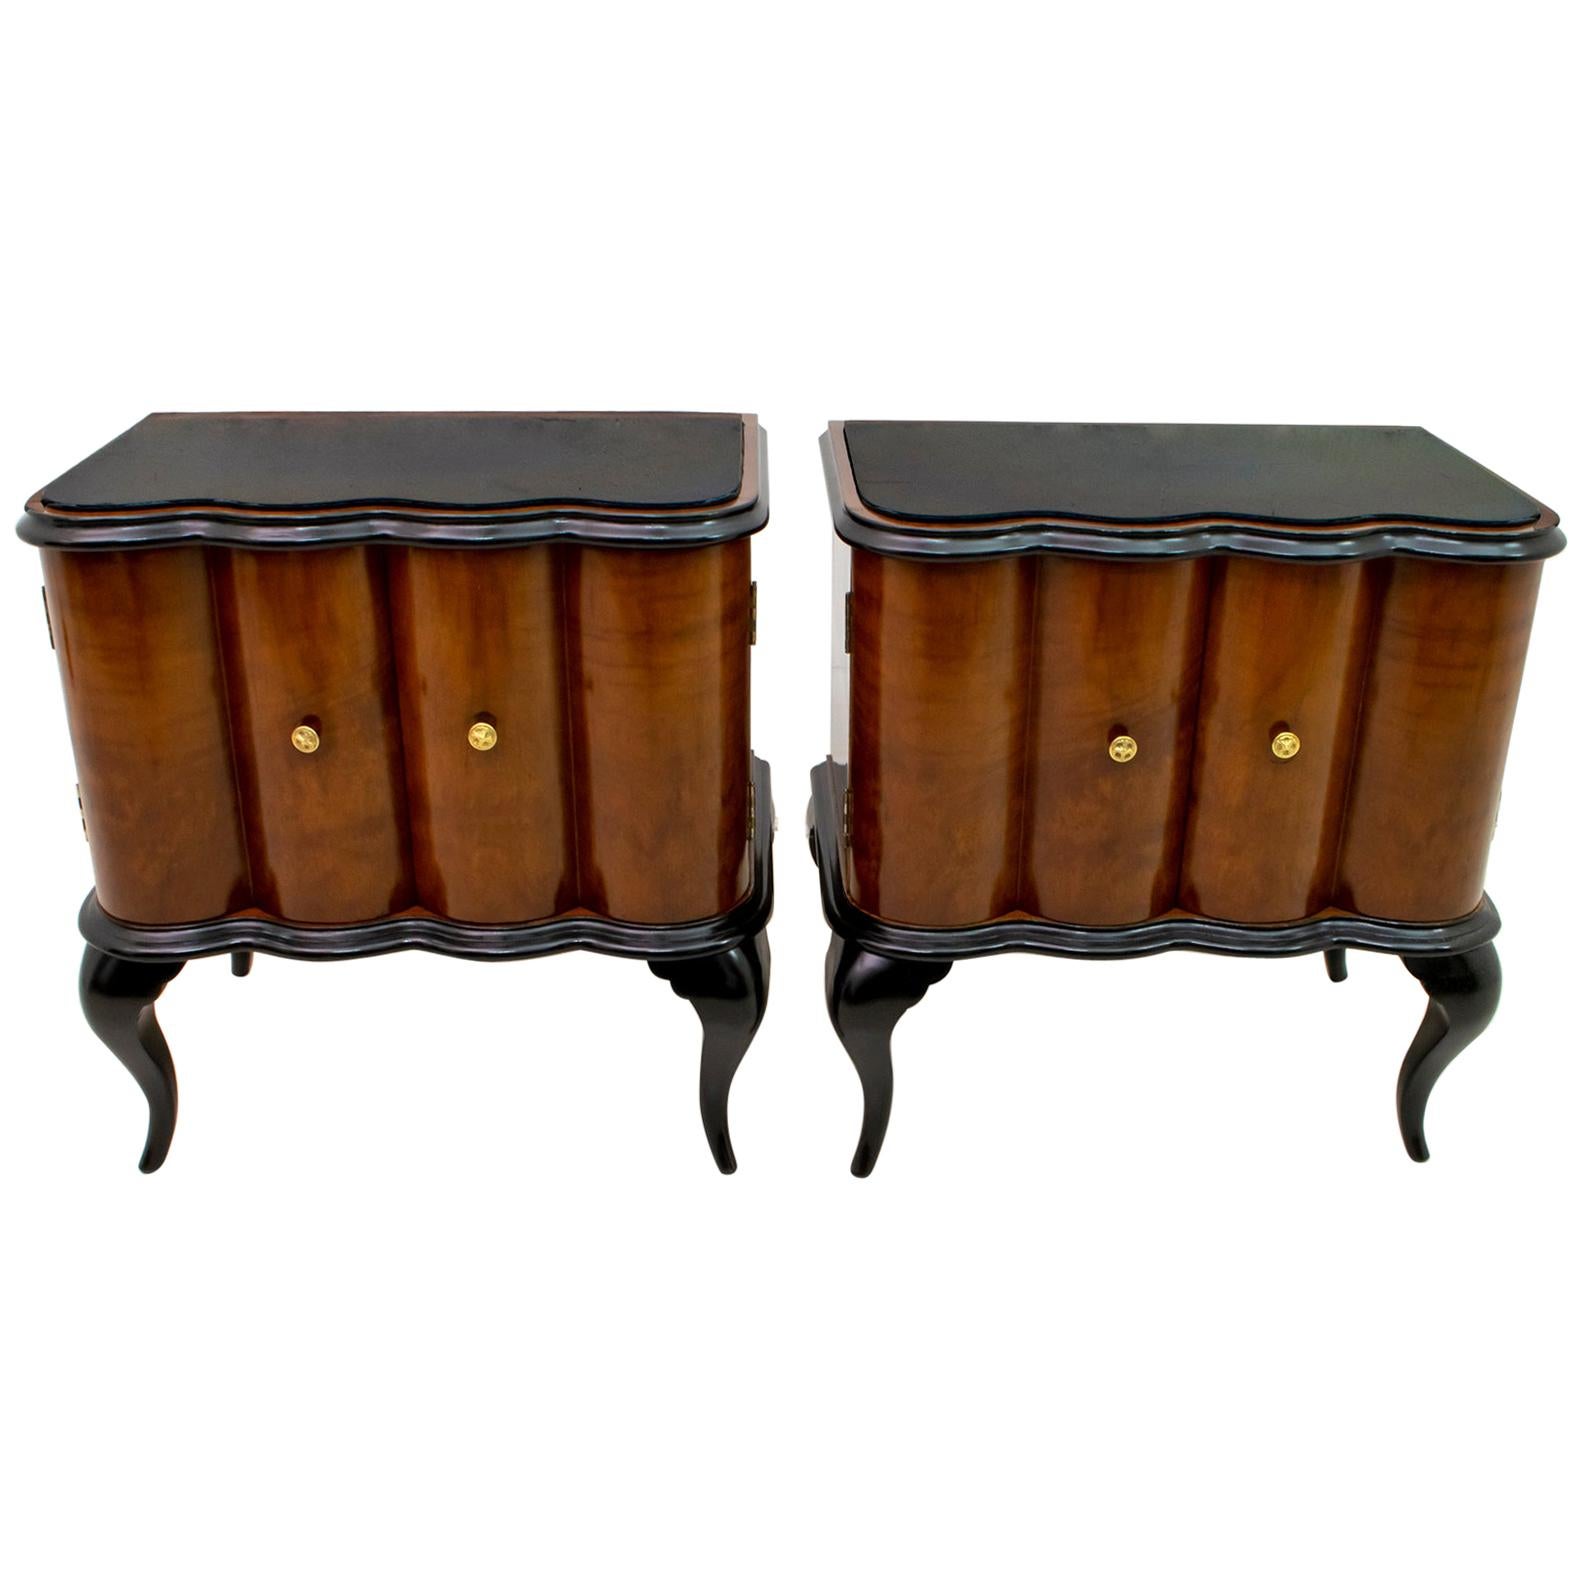 Pair of Art Deco Italian Walnut and Ebonized Wood Bedside Tables, 1920s